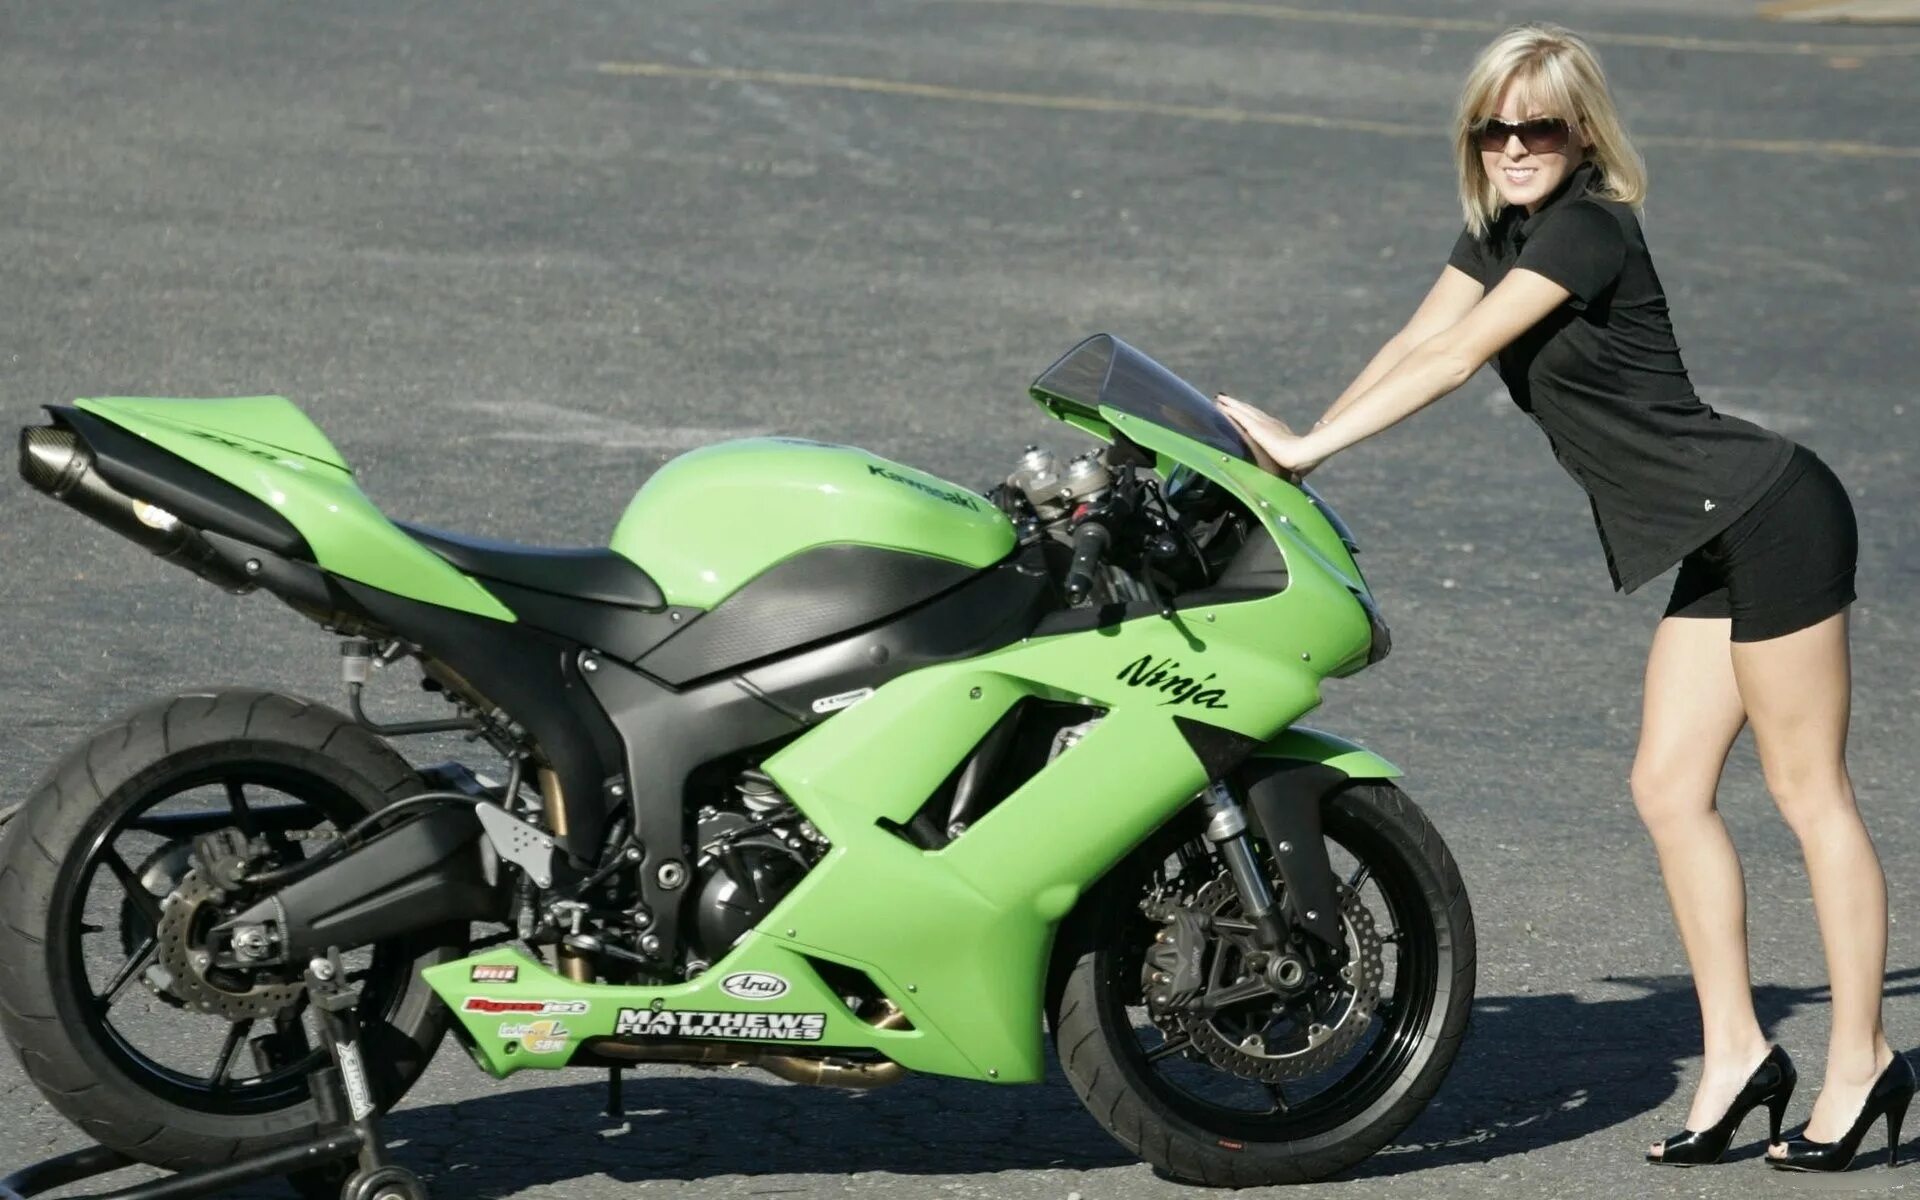 Blonde heel. Kawasaki Ninja ZX-10r девушки. Спортбайк Кавасаки ниндзя 400 с девушкам. Кавасаки ниндзя зеленый мотоцикл девушка. Девушка на Кавасаки ниндзя.